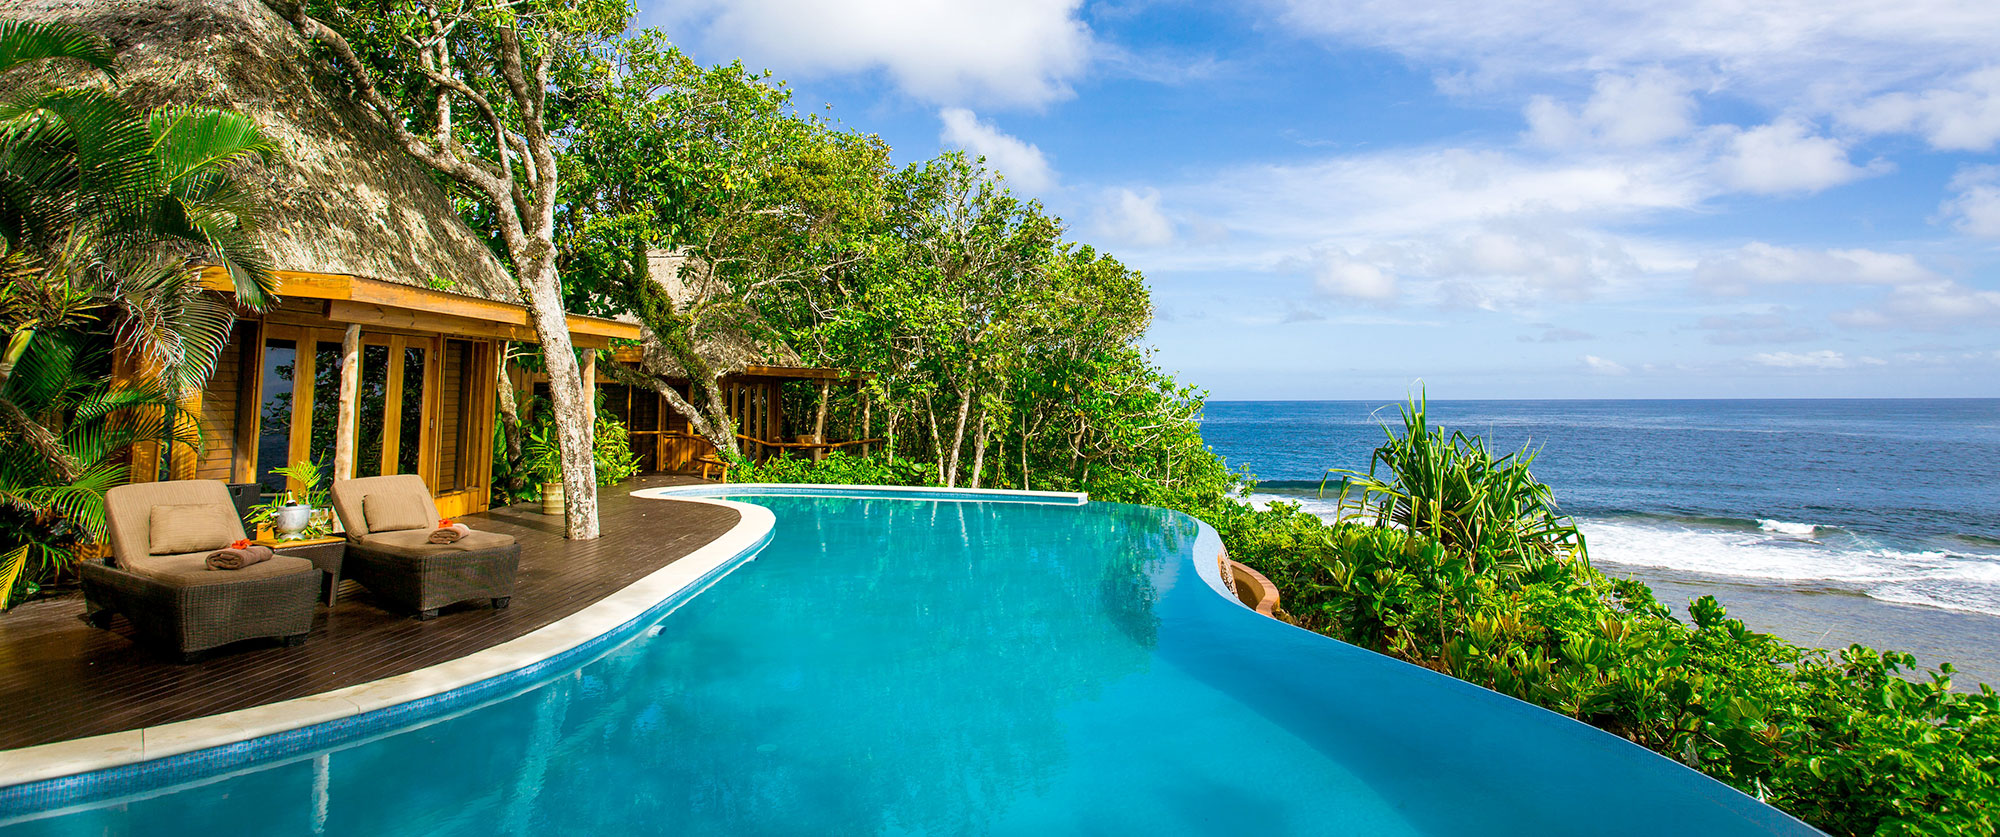 Luxury Fiji honeymoon - Namale Resort & Spa - All Inclusive Honeymoon